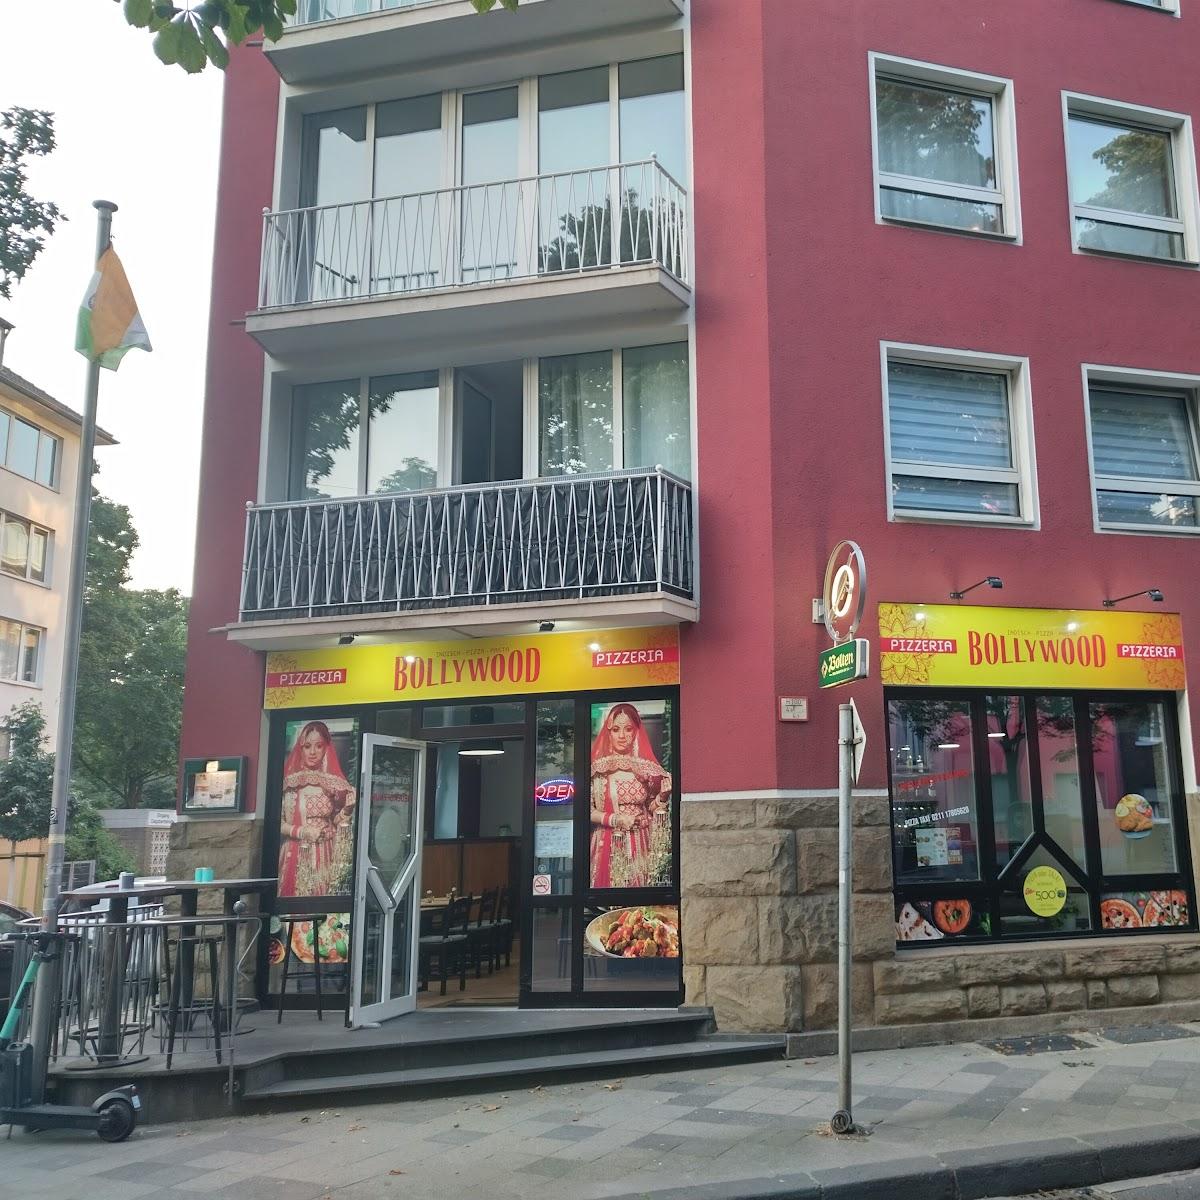 Restaurant "Bollywood pizzeria" in Düsseldorf